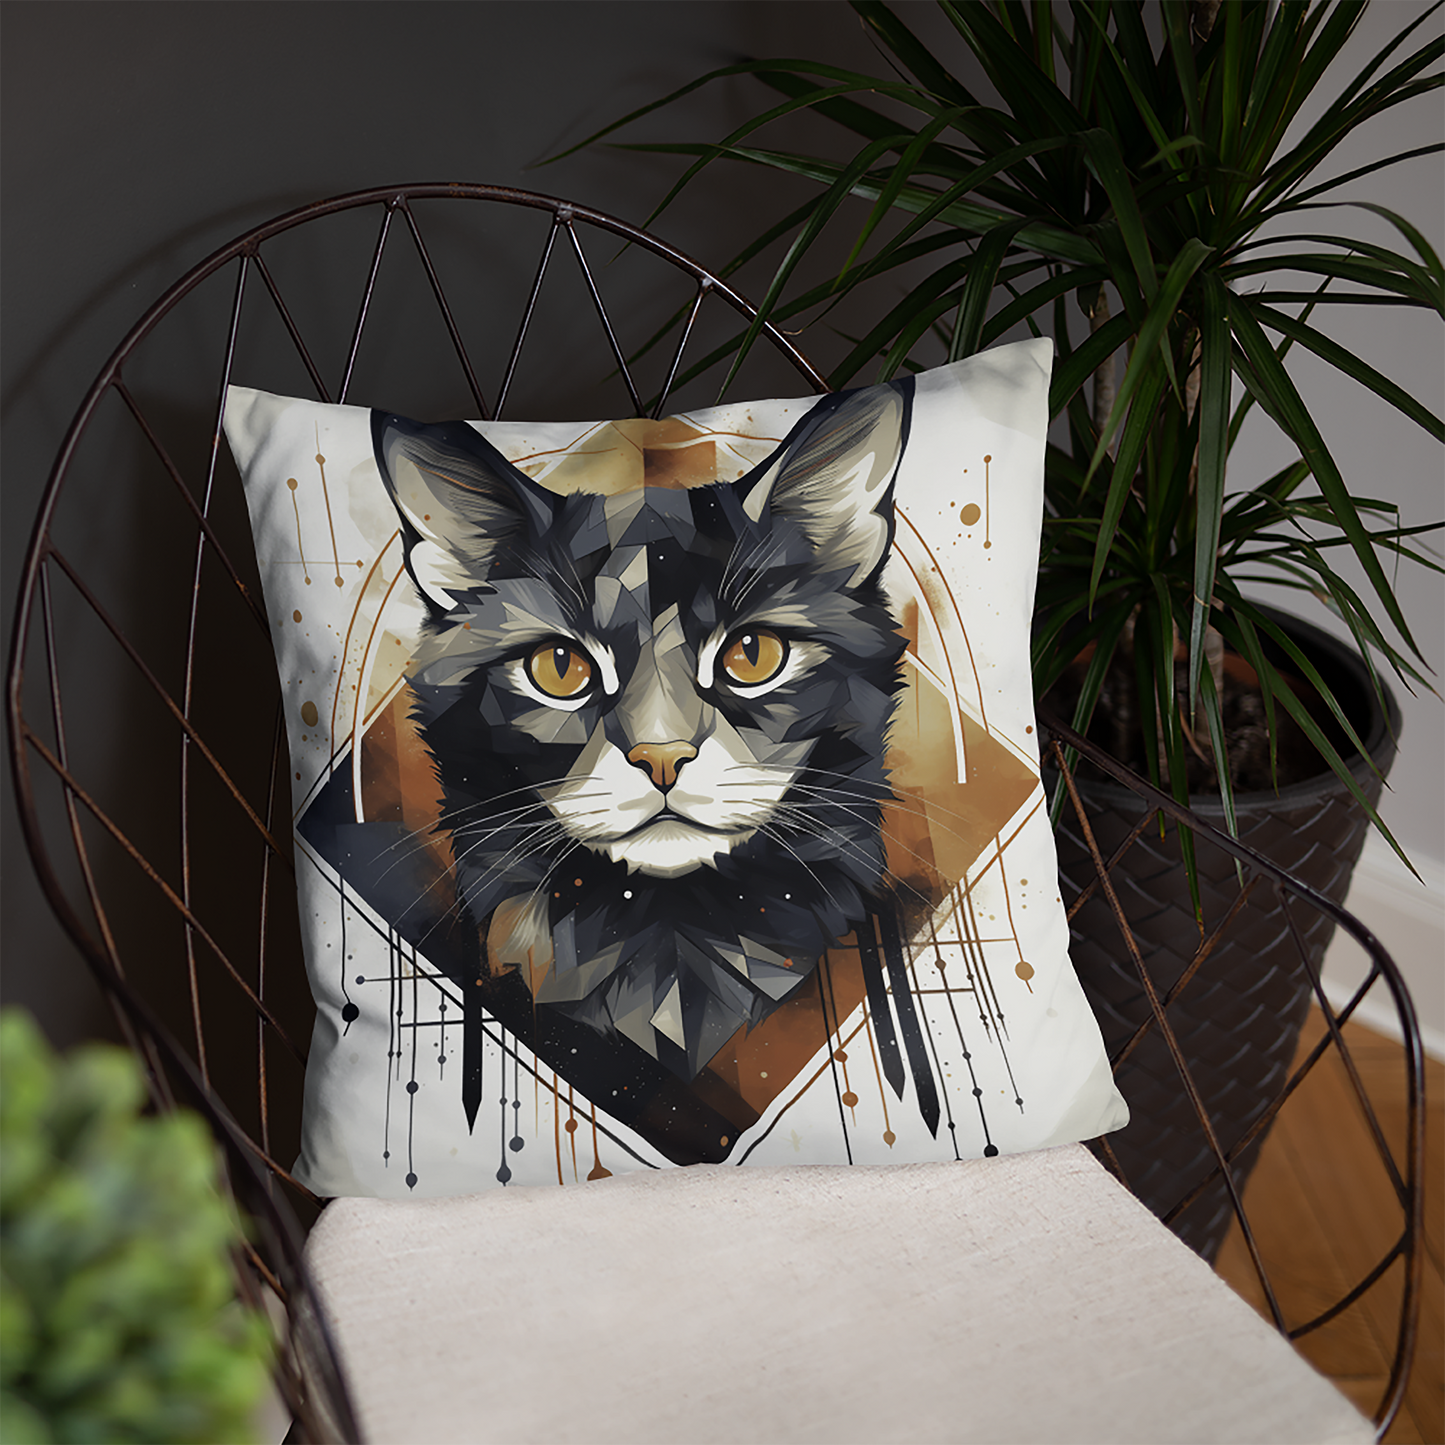 Cat Throw Pillow Geometric Feline Gaze Watercolor Illustration Polyester Decorative Cushion 18x18